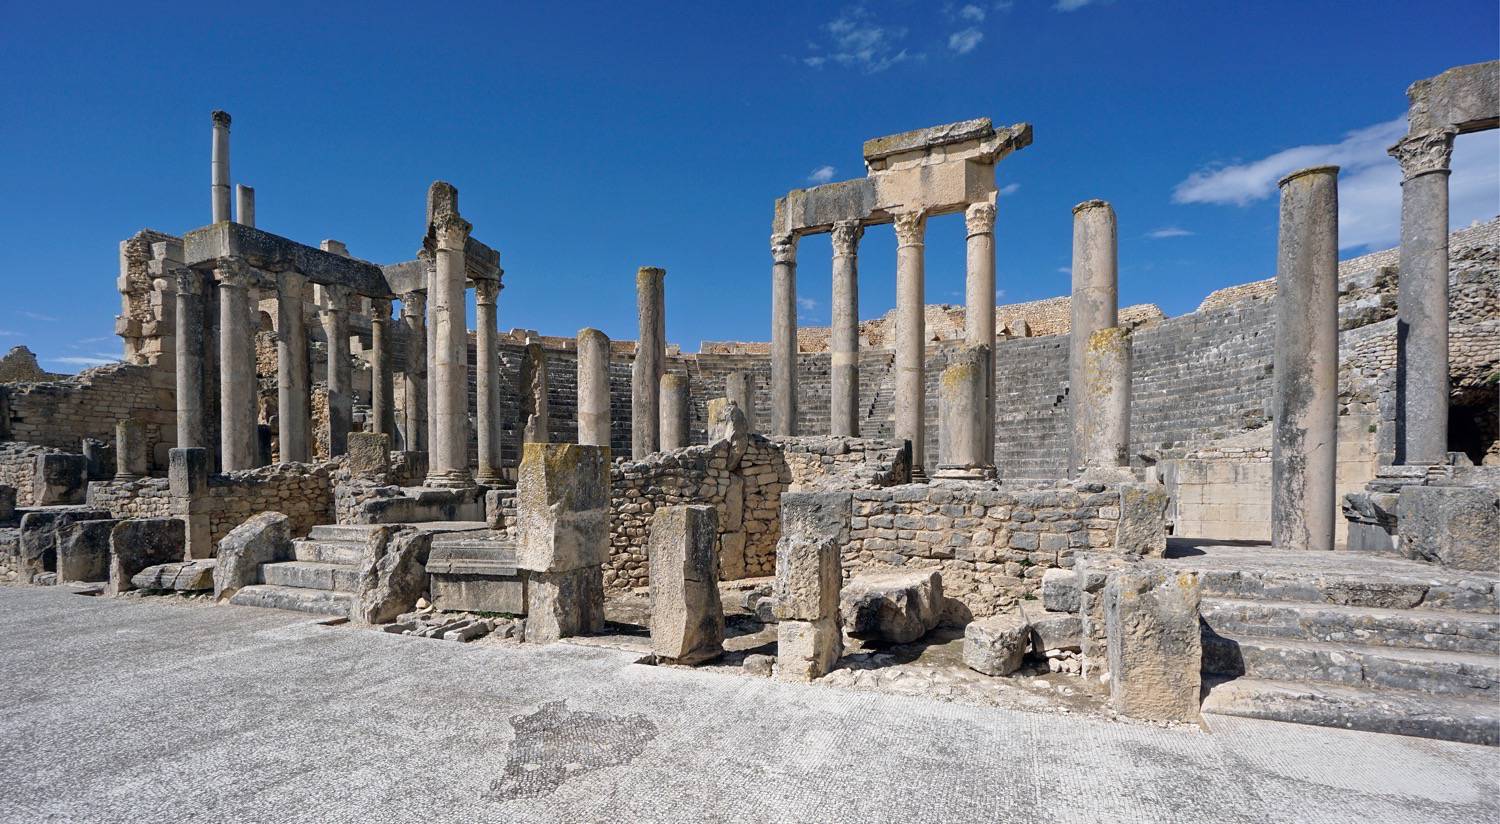 The Roman theatre - the columns of scenery